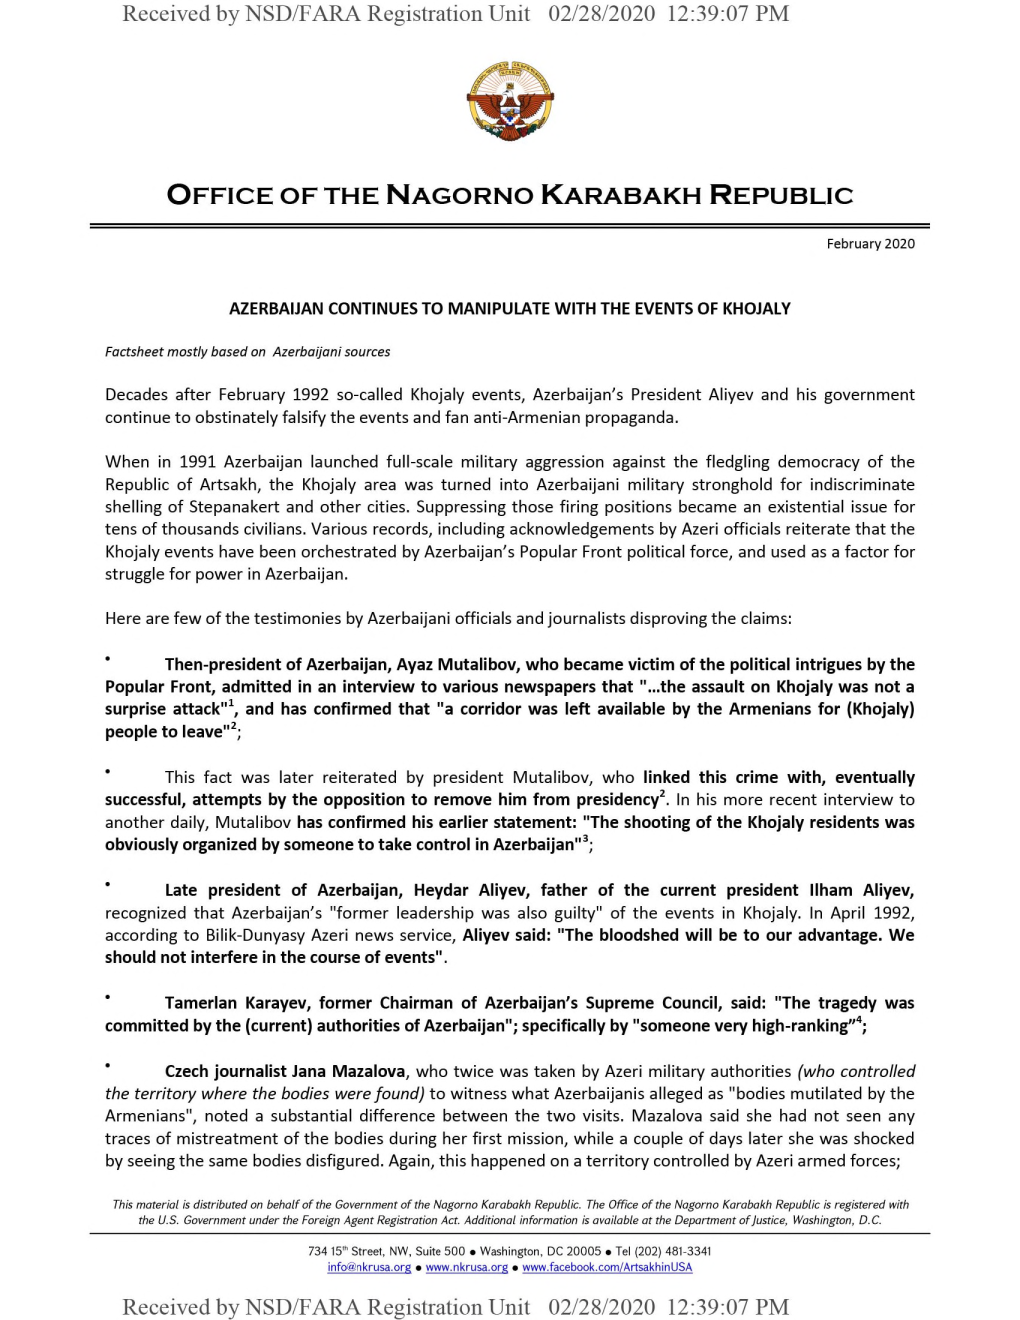 Office of the Nagorno Karabakh Republic